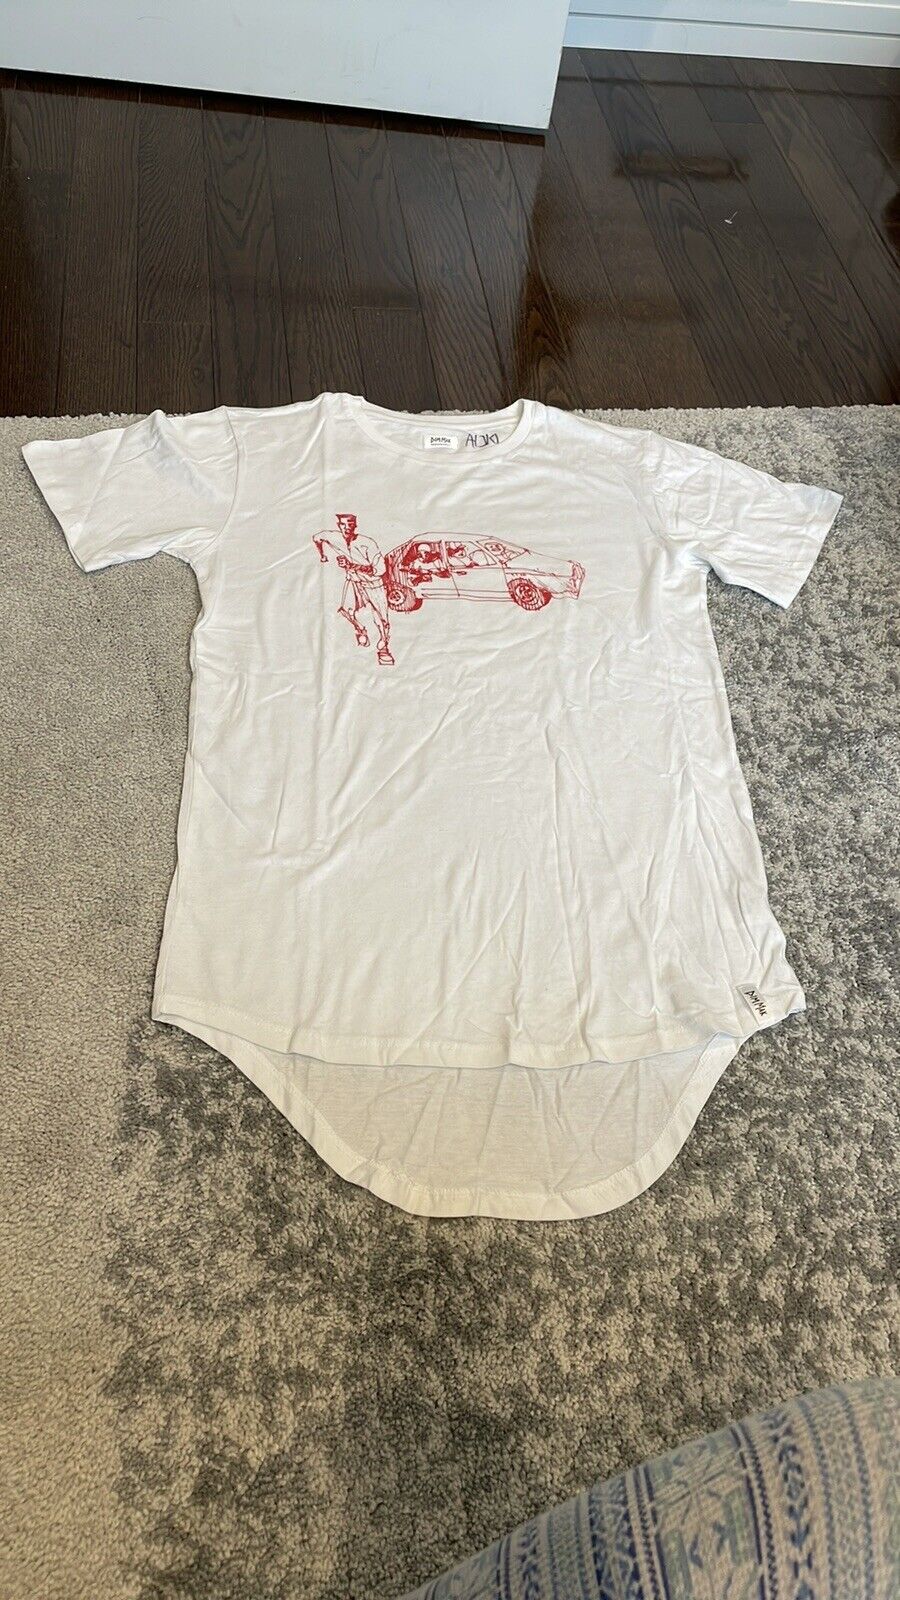 DIM MAK t shirt with Steve Aoki signature - image 1